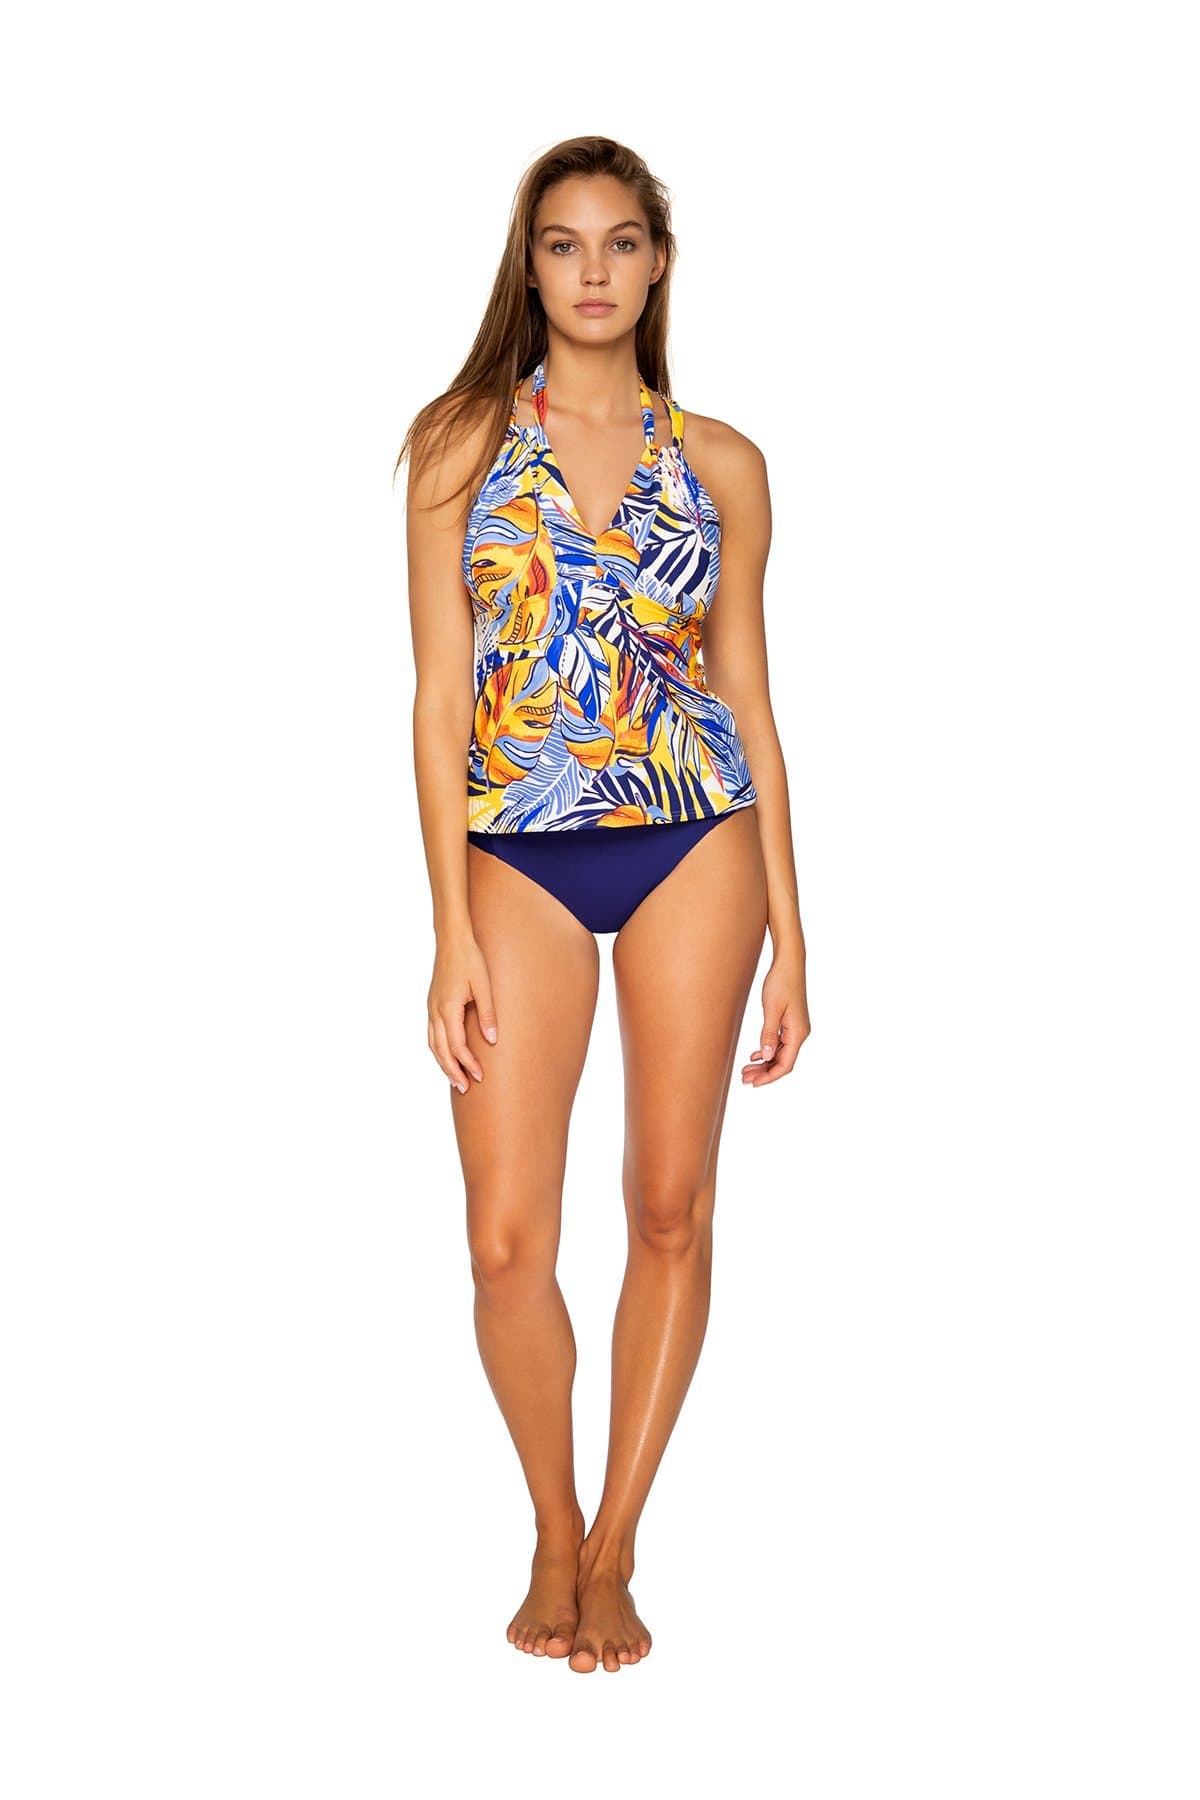 Bestswimwear -  Sunsets Bahama Breeze Mia Tankini